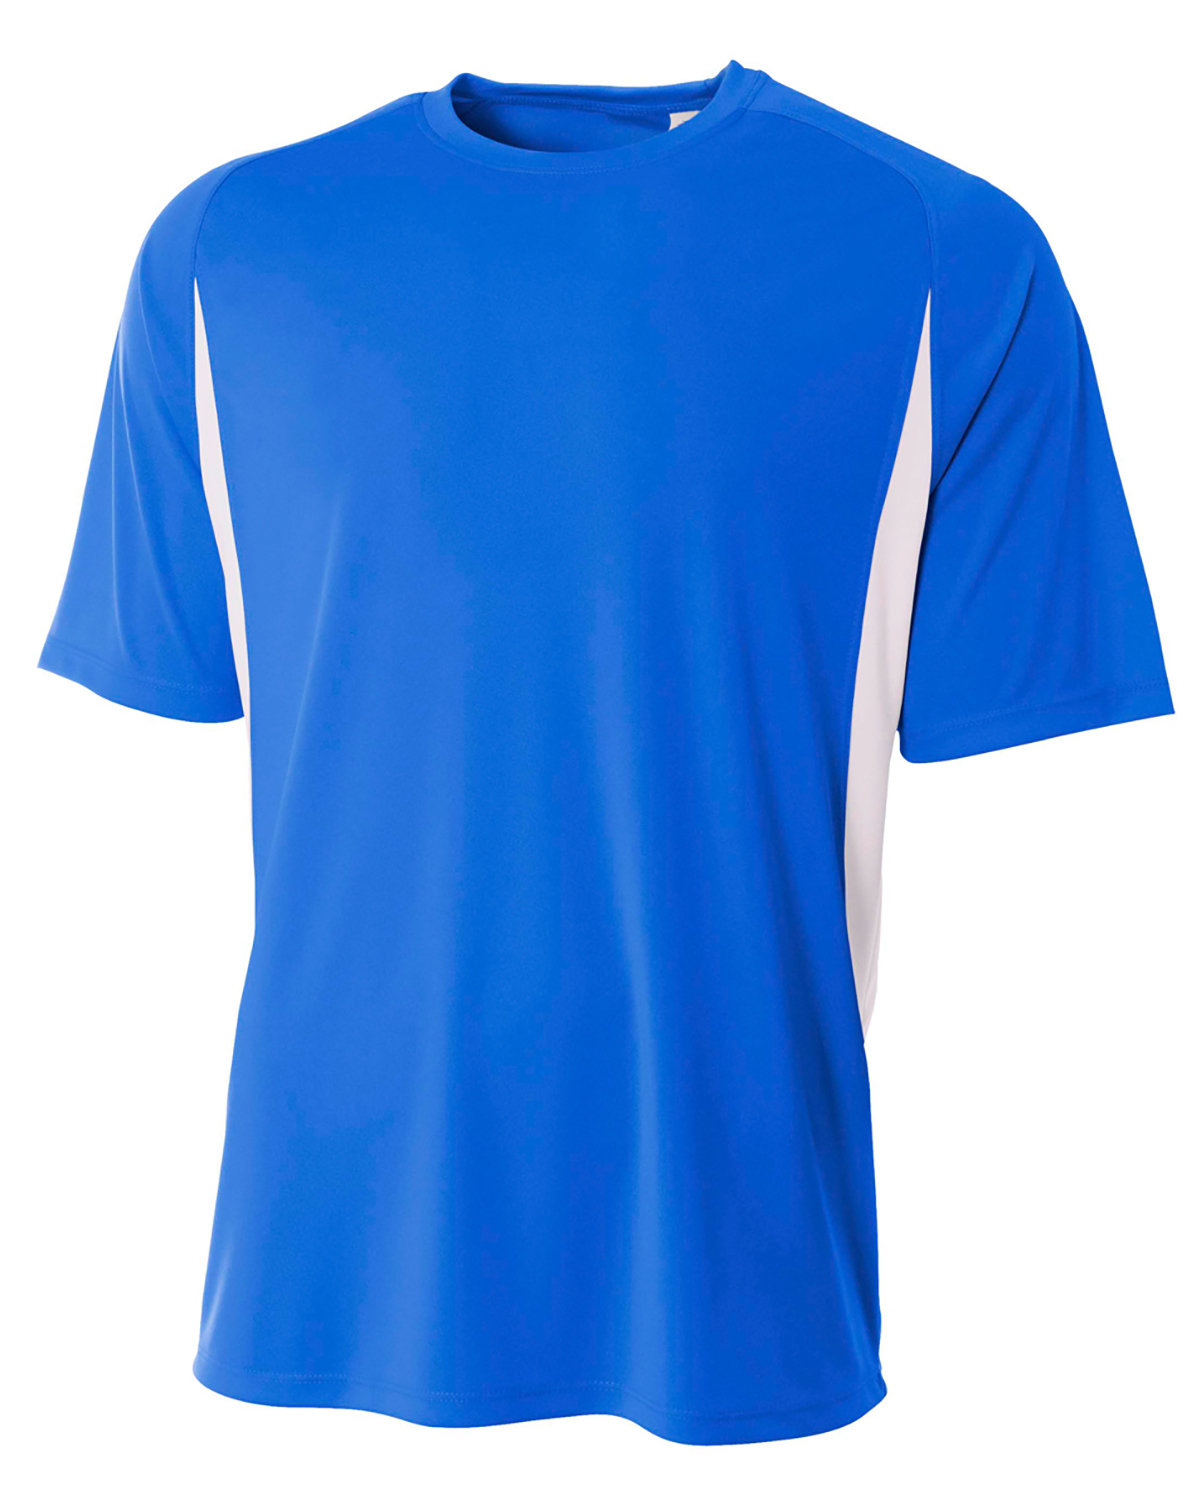 Performance Cooling T-Shirt | A4 alphabroder Blocked Color Men\'s